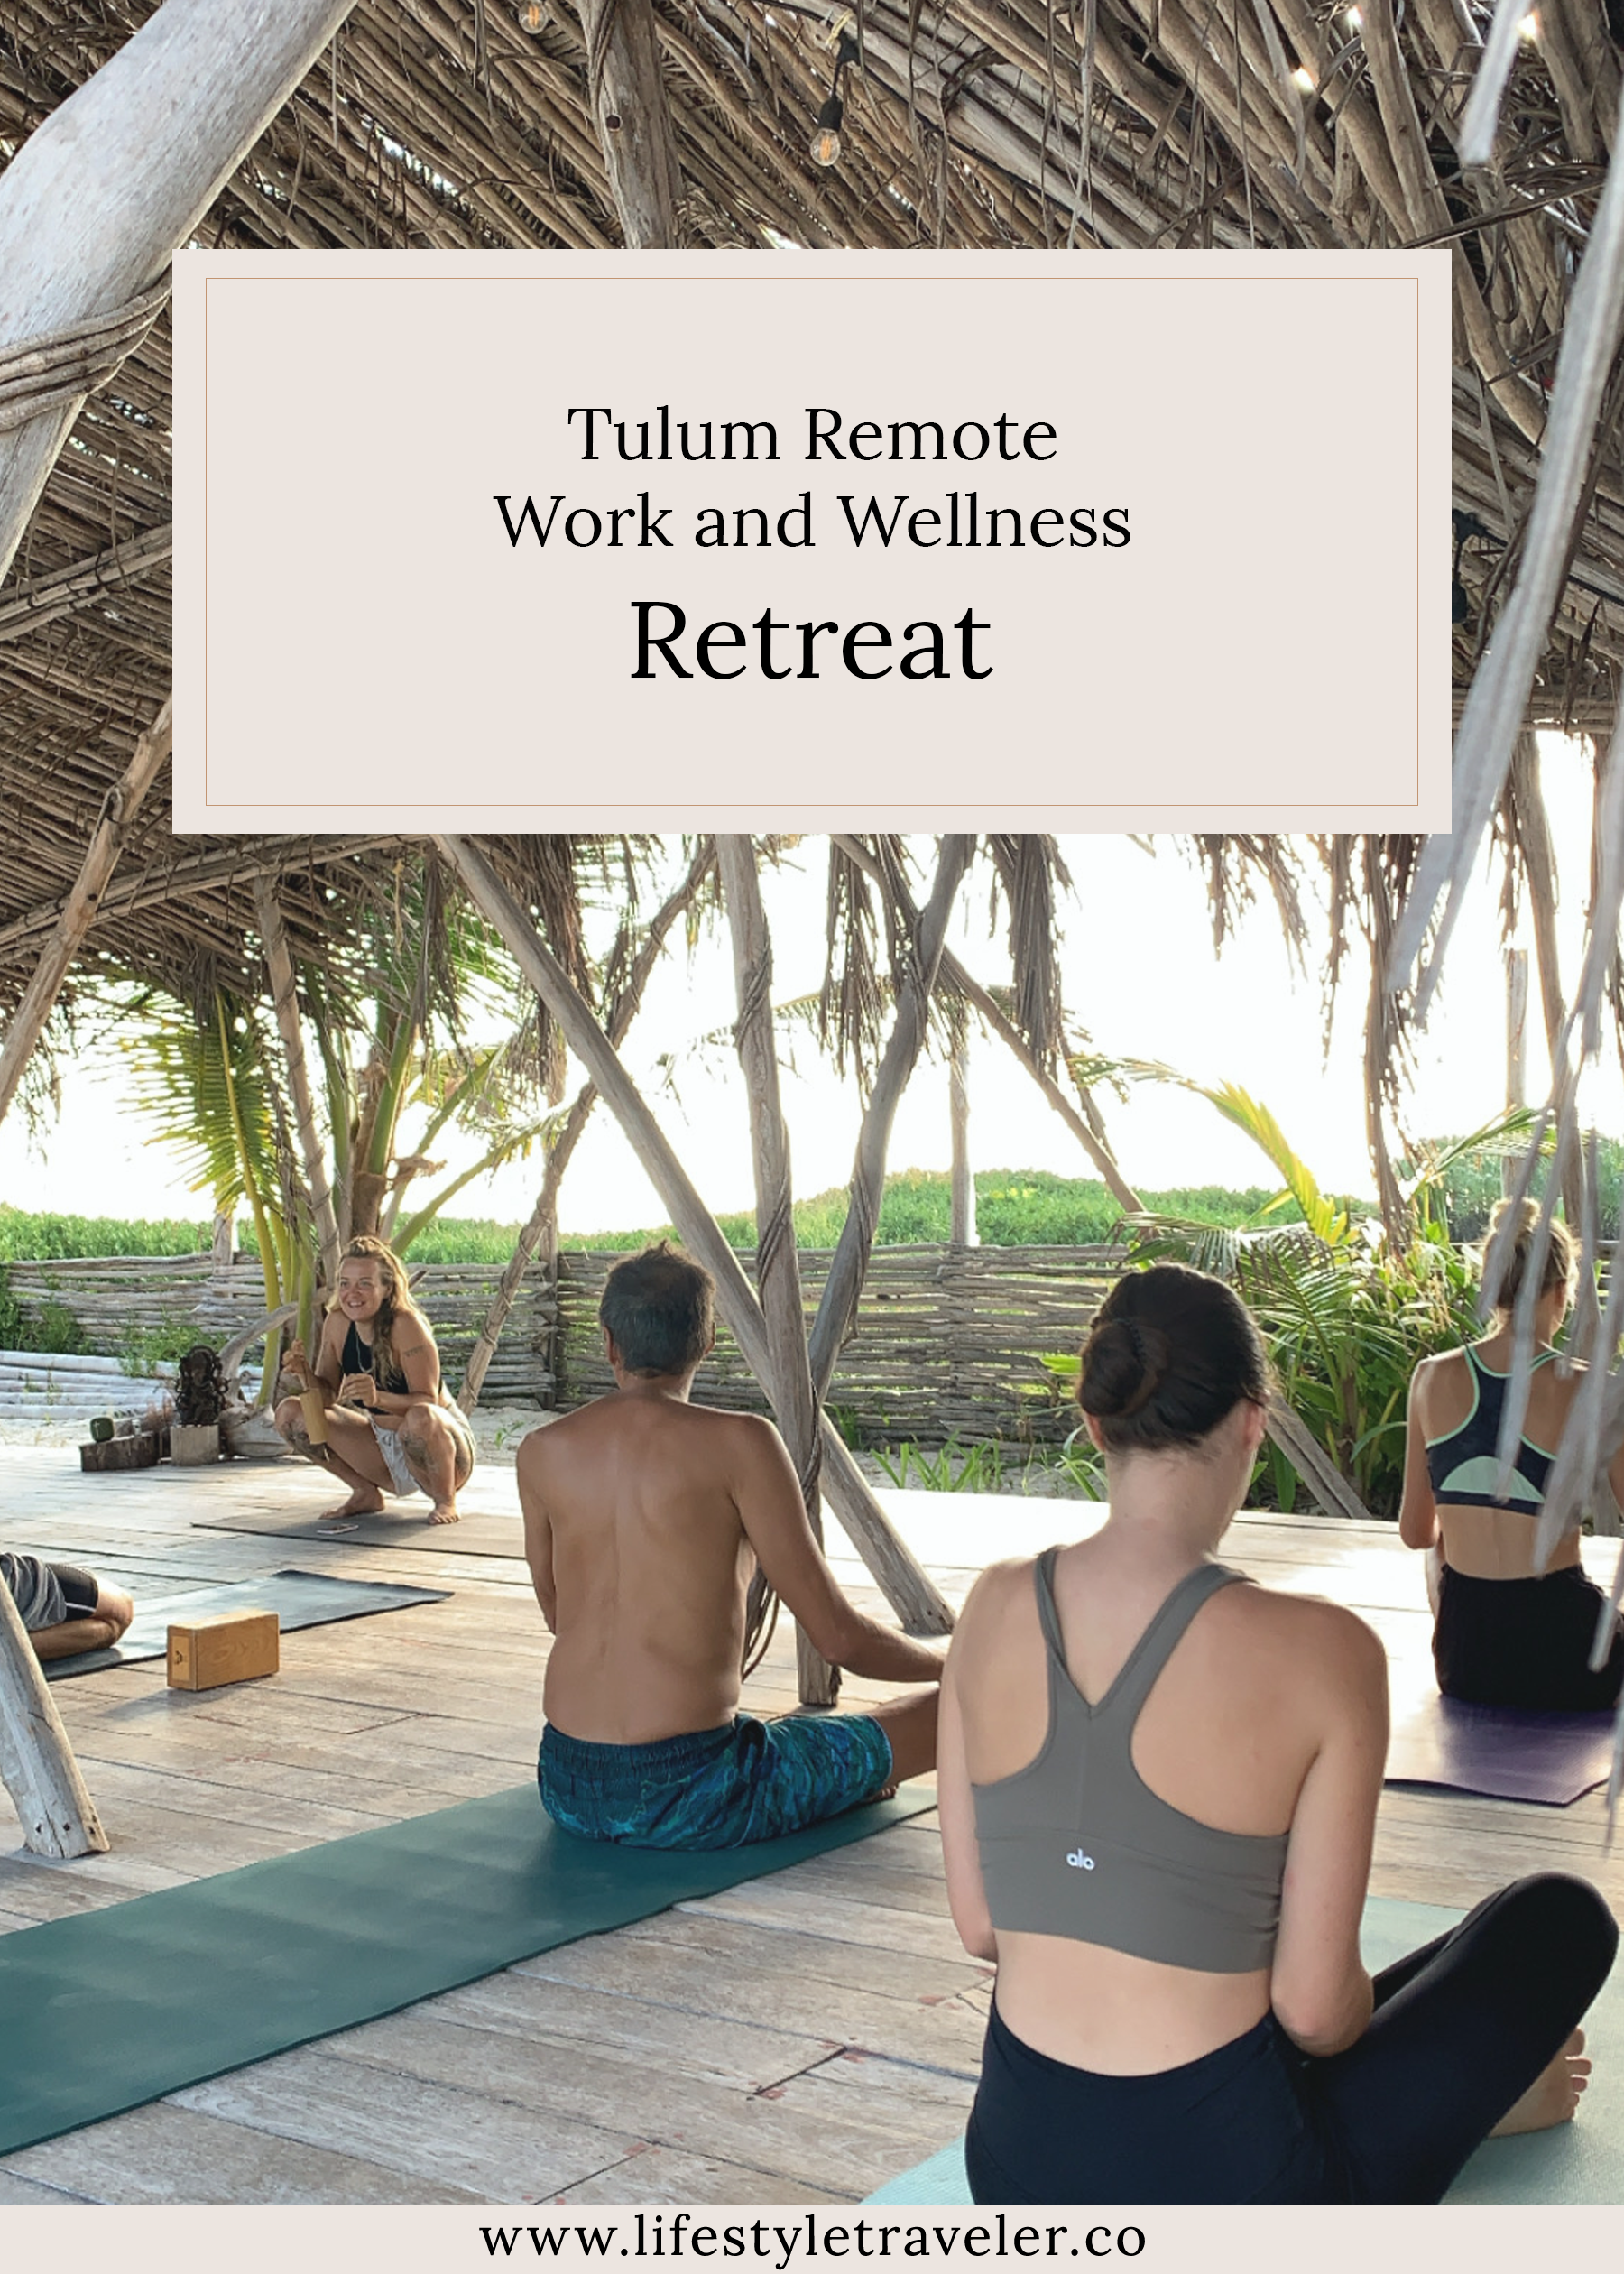 Tulum Remote Work and Wellness Retreat | lifestyletraveler.co | IG: @lifestyletraveler.co